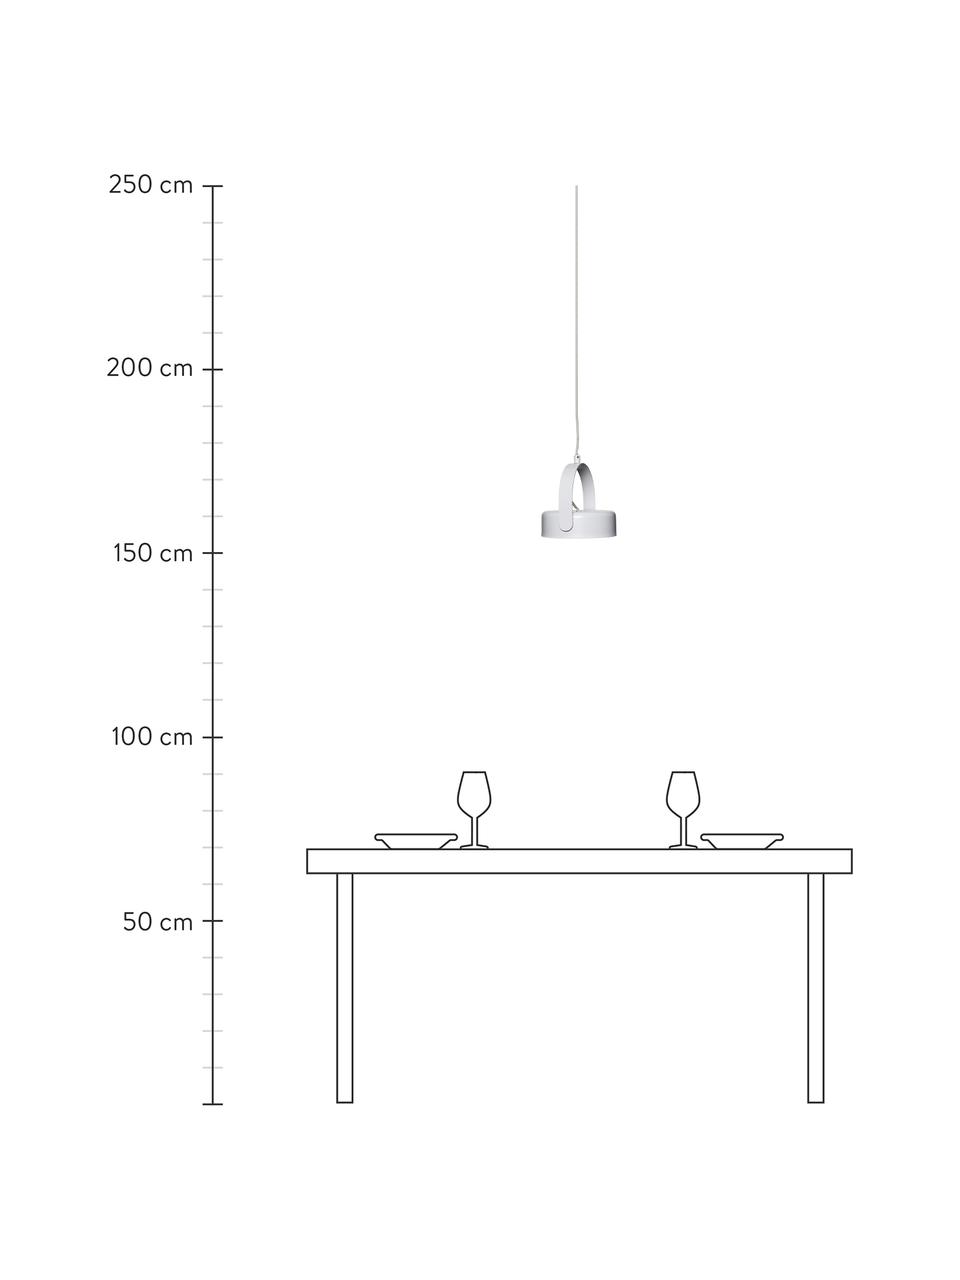 Lámpara de techo pequeña regulable LED Stage, Cable: plástico, Gris claro, An 22 x Al 27 cm